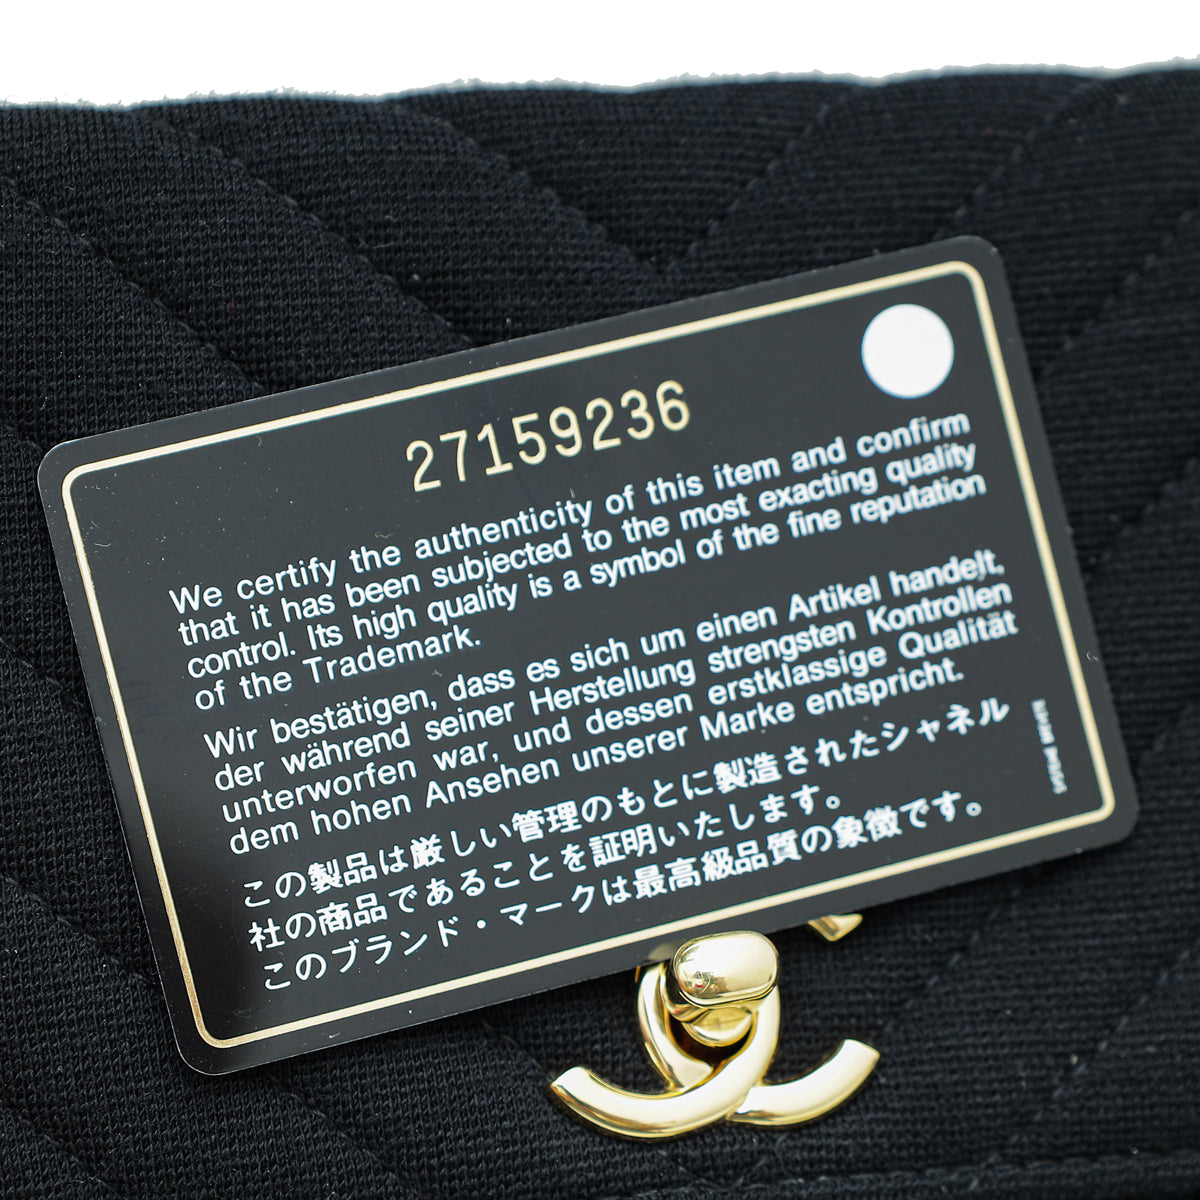 Chanel Black CC Chevron Trendy Jersey Wallet On Chain